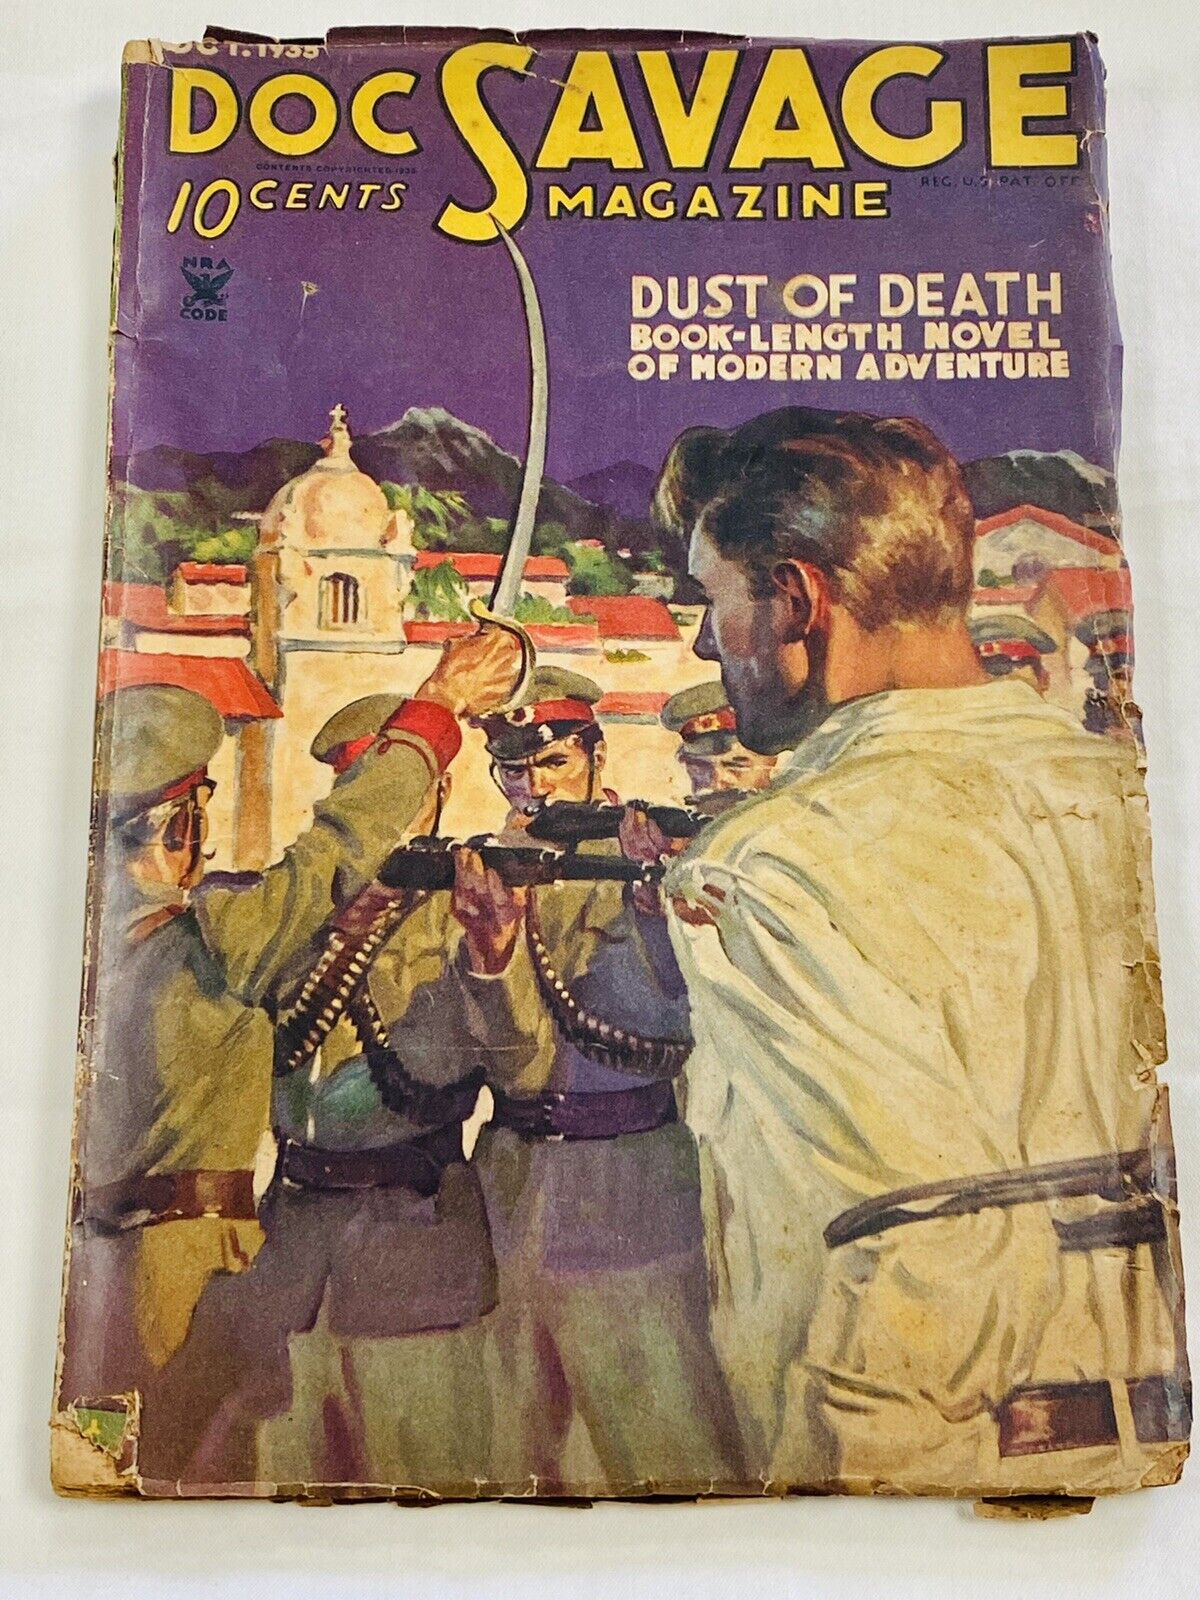 Original Doc Savage October 1935 Pulp Magazine “Dust Of Death” Volume 6 # 2